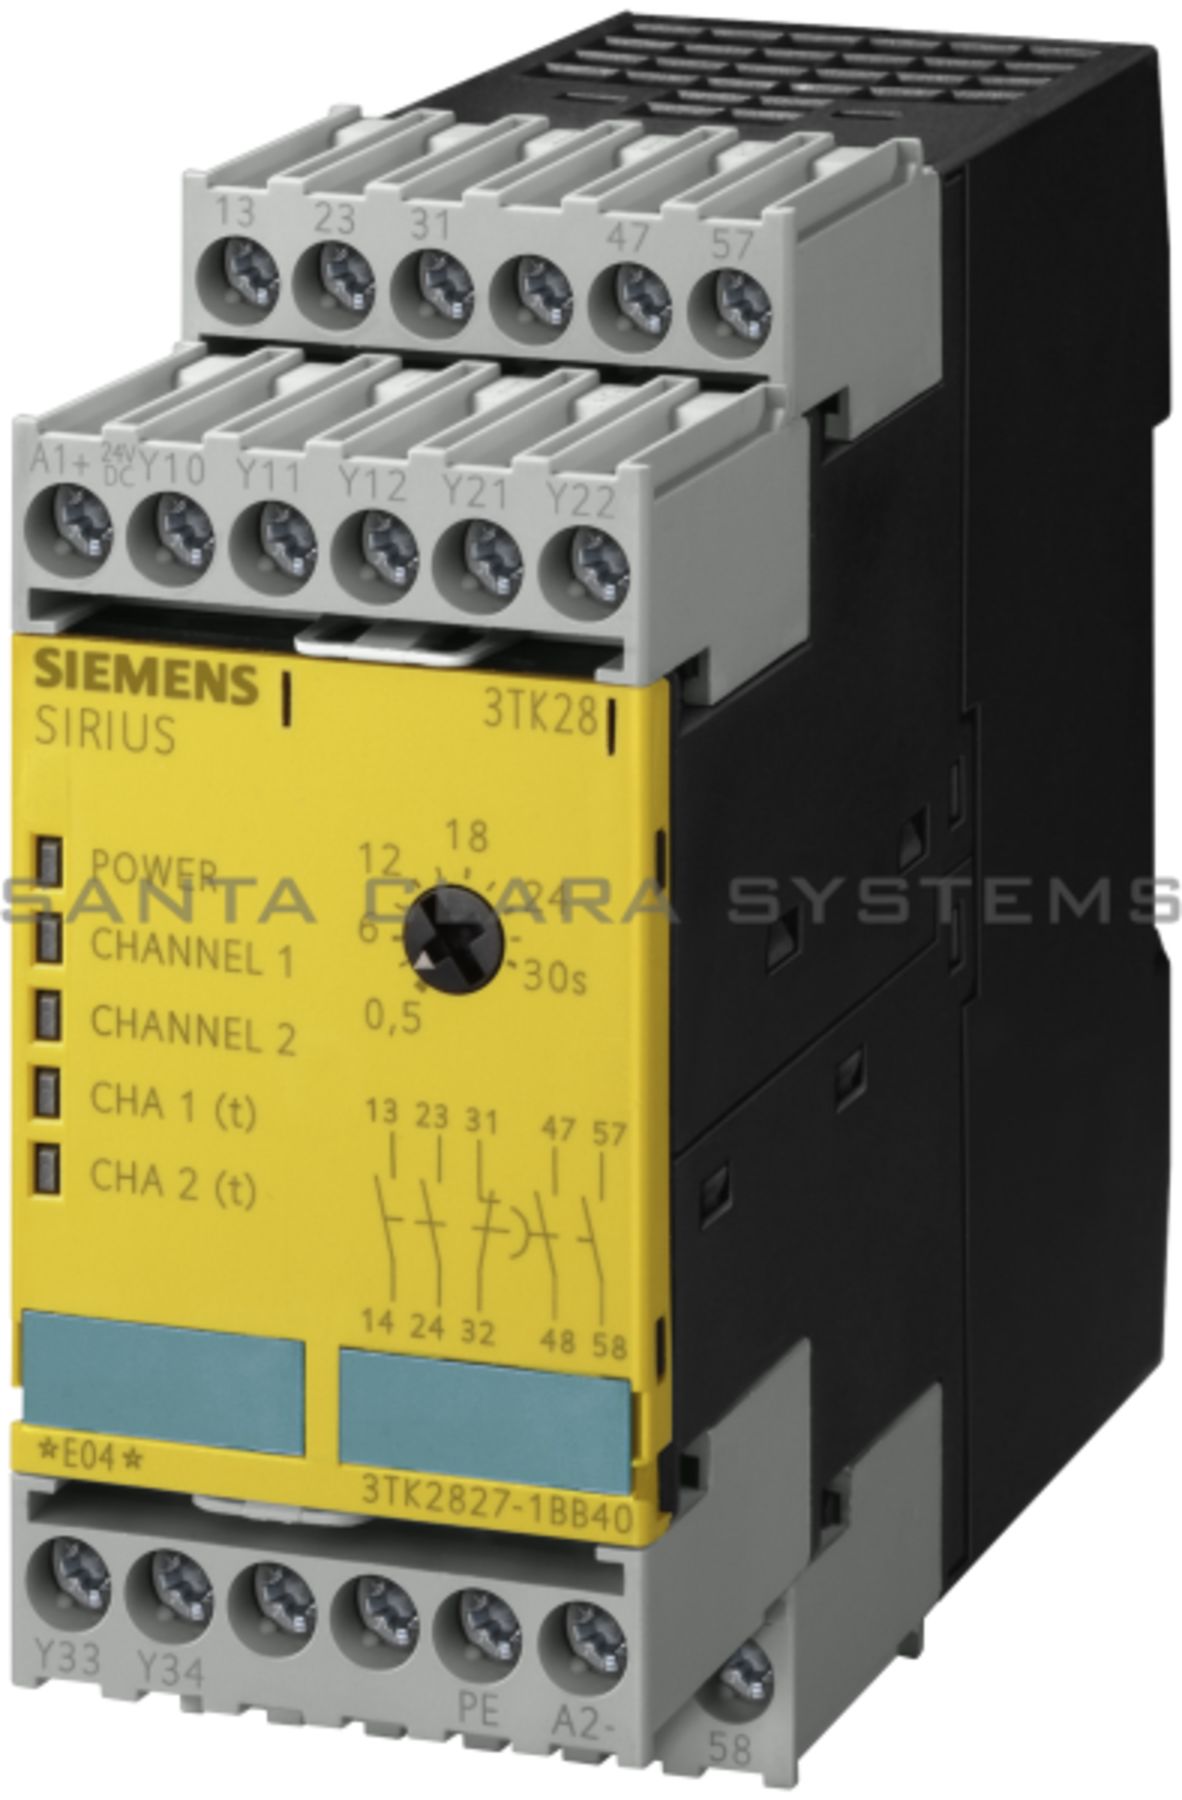 3TK2827-1BB40 Siemens Siguard Safety Relay - Santa Clara Systems